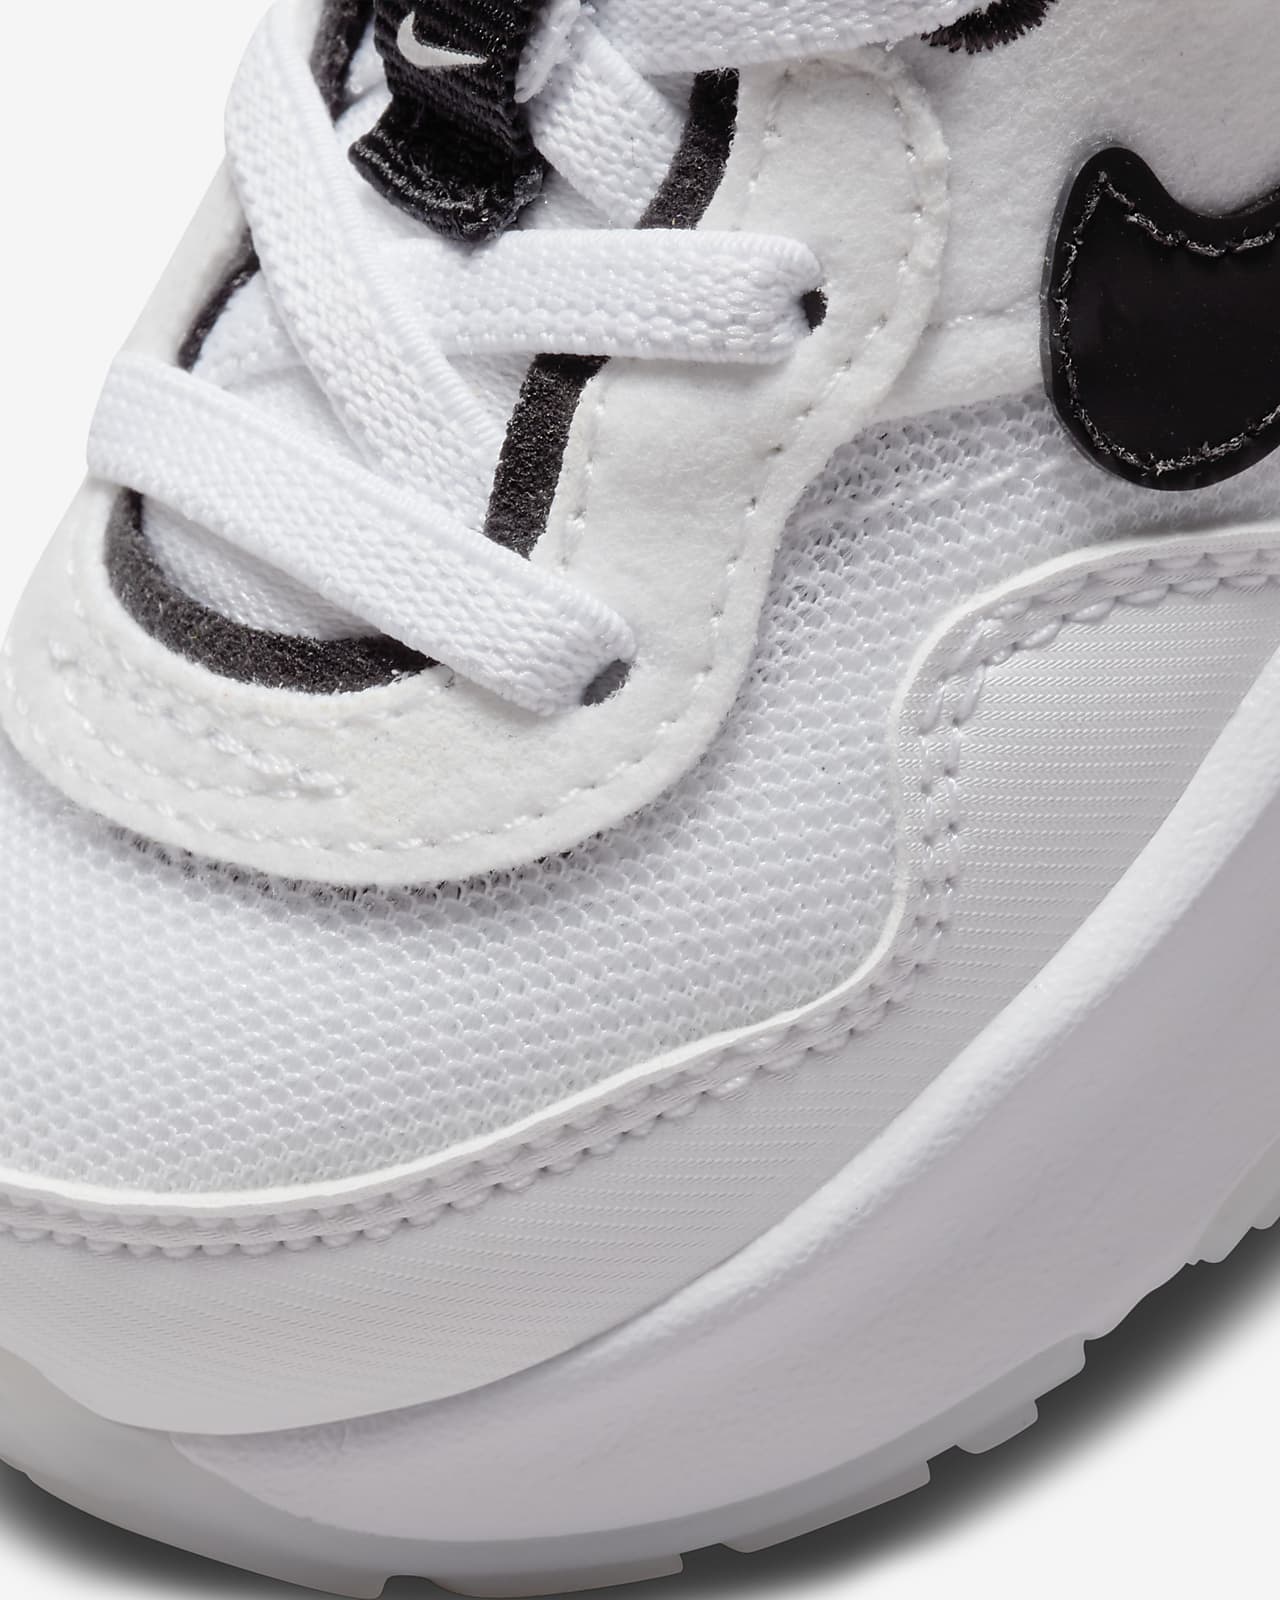 Nike Air Max Motif Baby/Toddler Shoes.